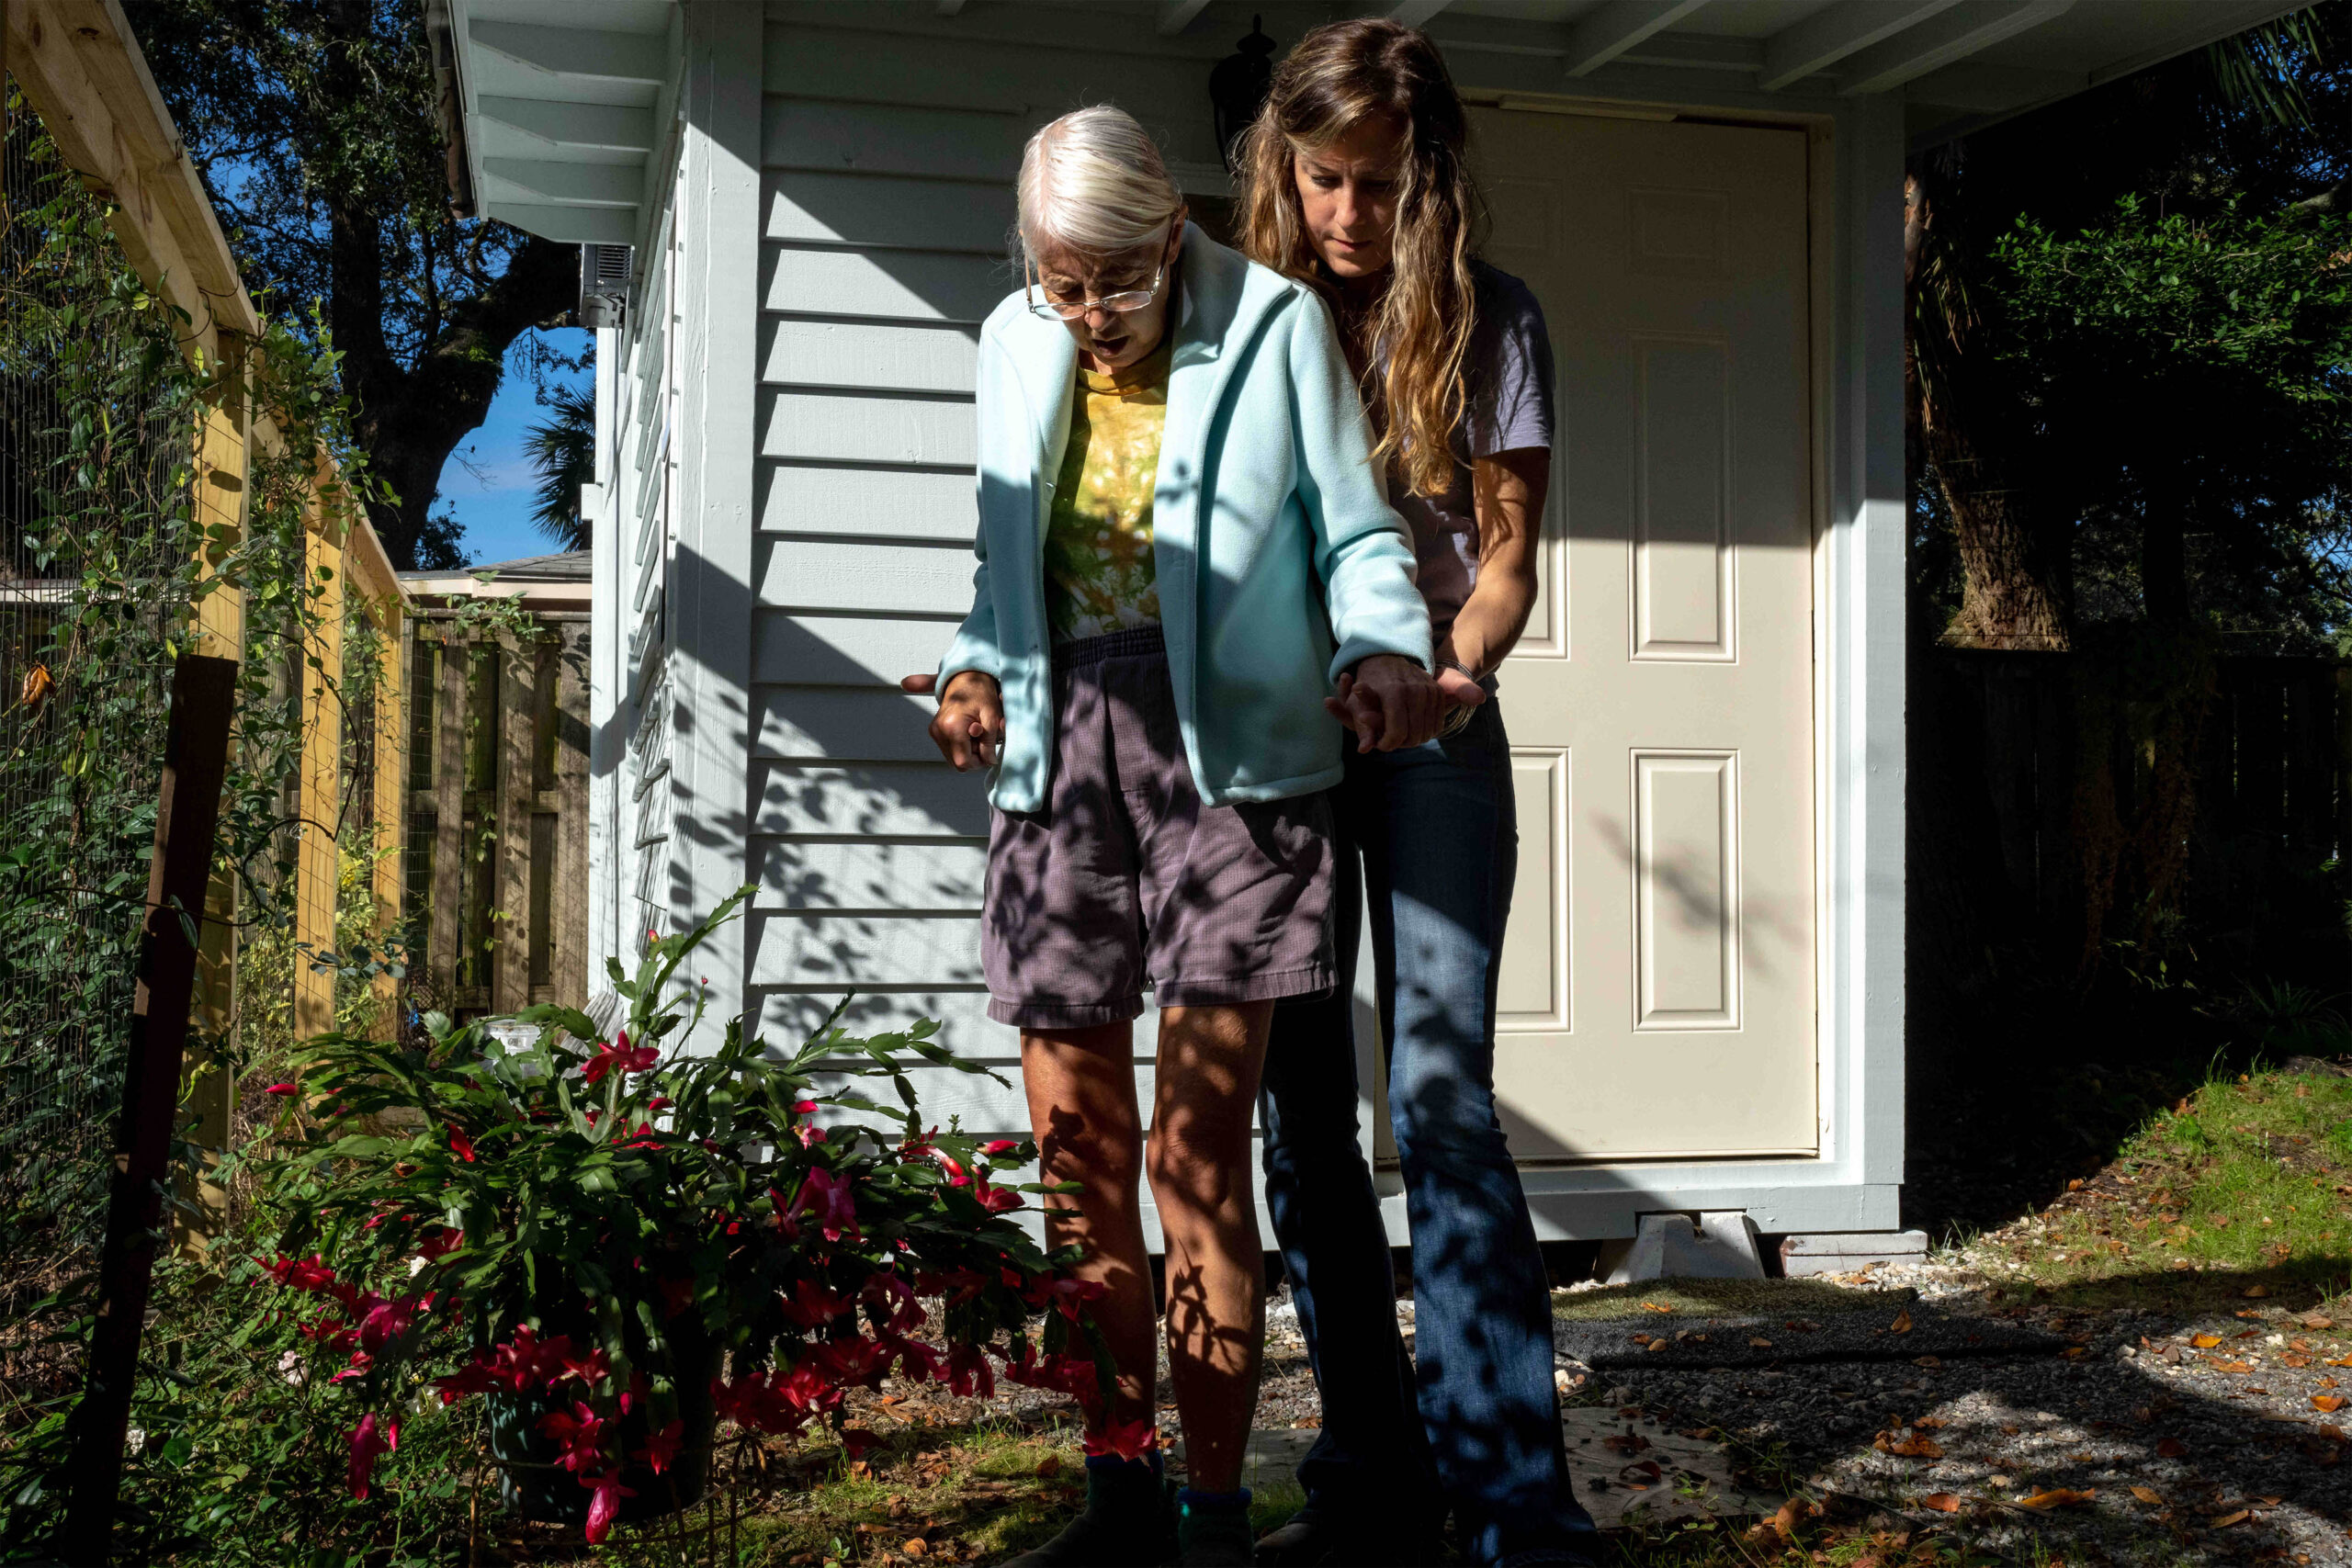 A photo of a caretaker helping an elderly woman walk outside.